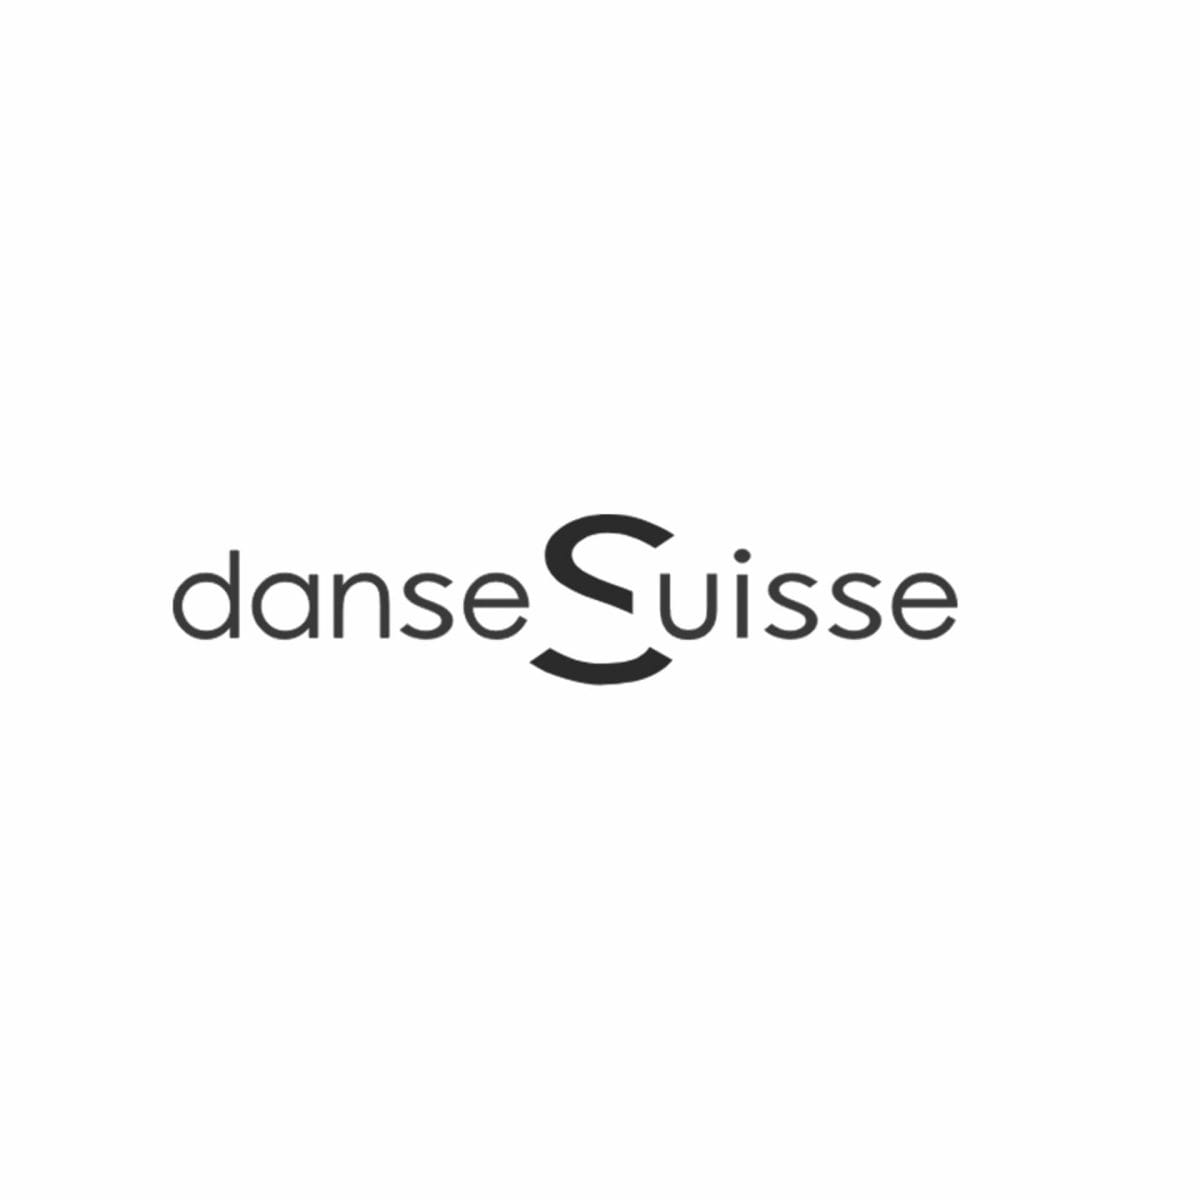 danse suisse logo